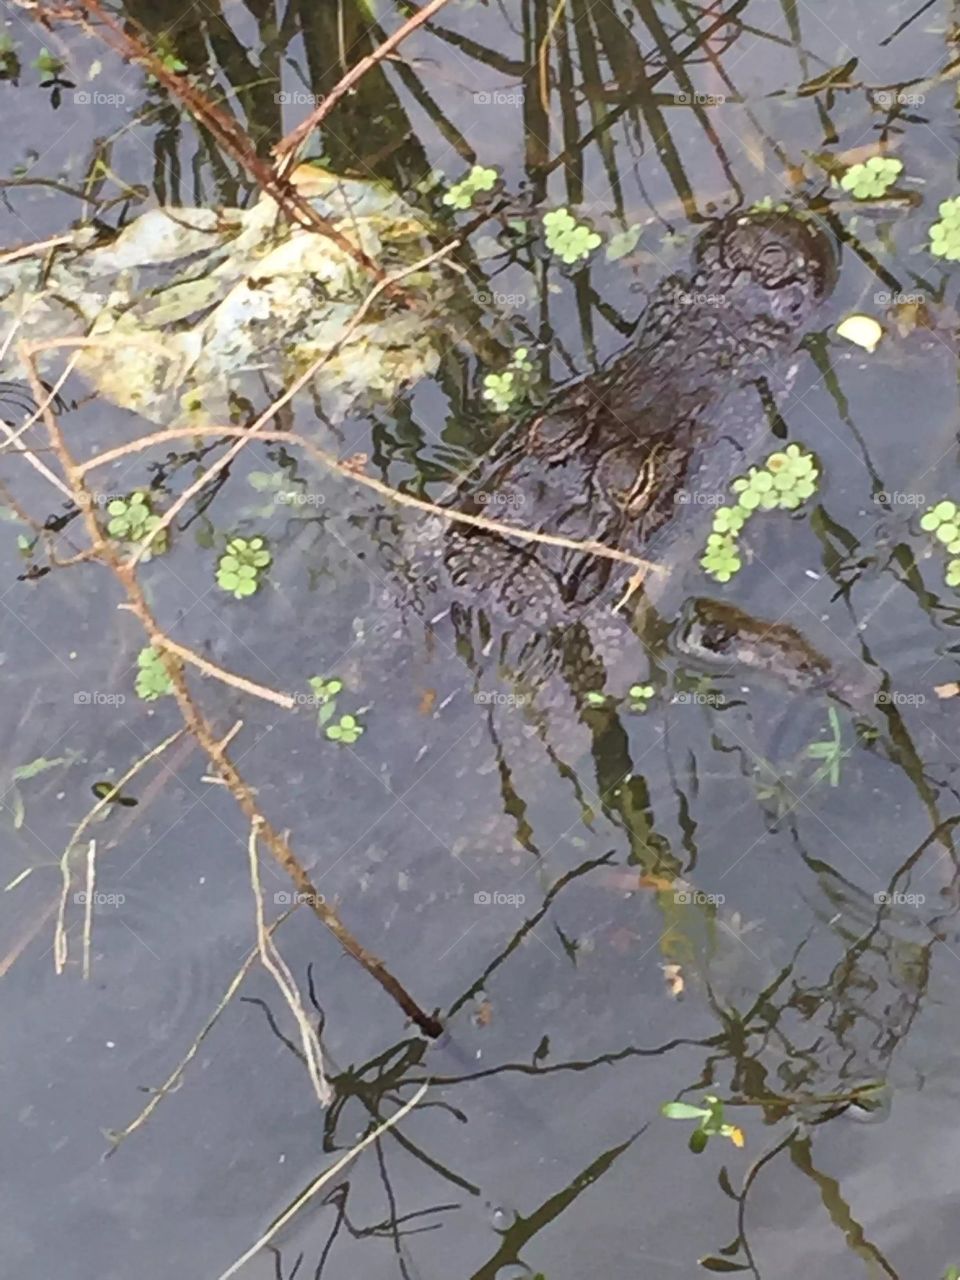 Alligator, swamp, land o lakes Florida, retention pond. 